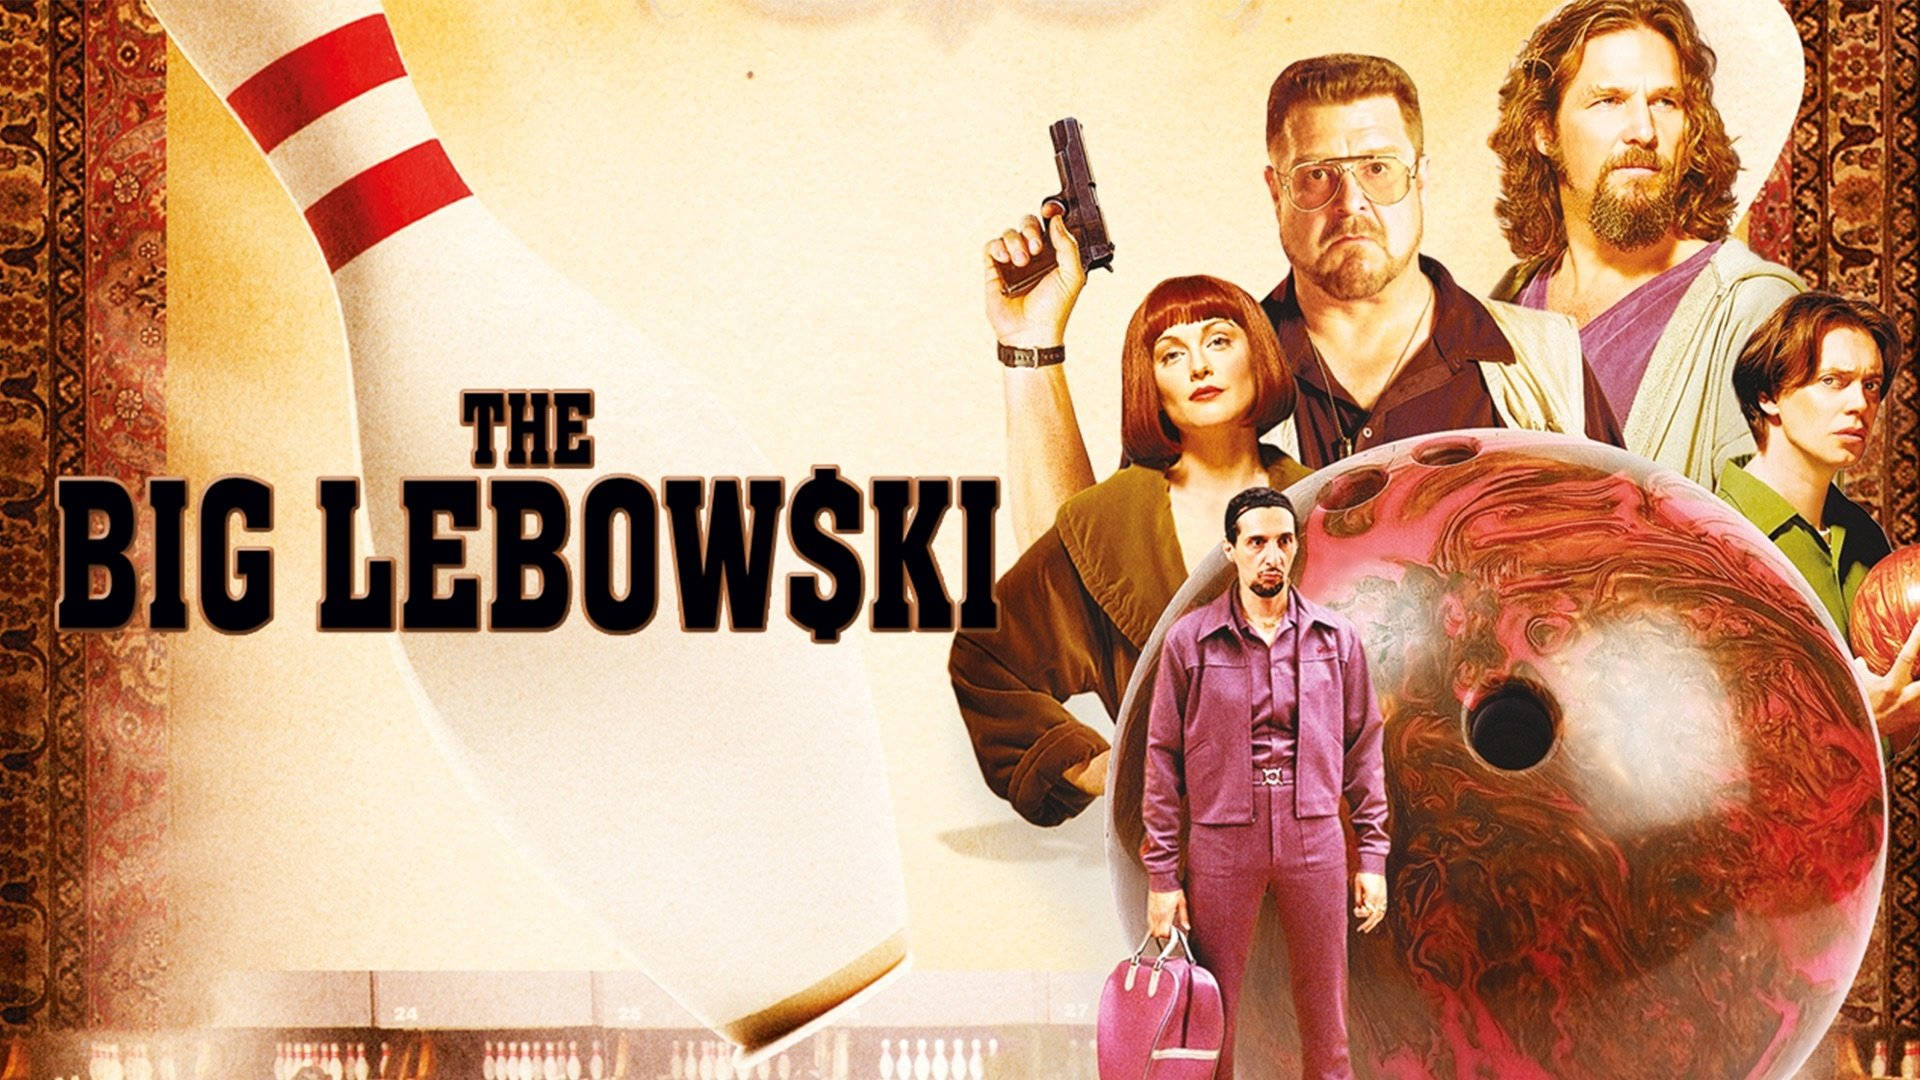 Download The Big Lebowski Movie Poster Digital Art Wallpaper |  Wallpapers.com